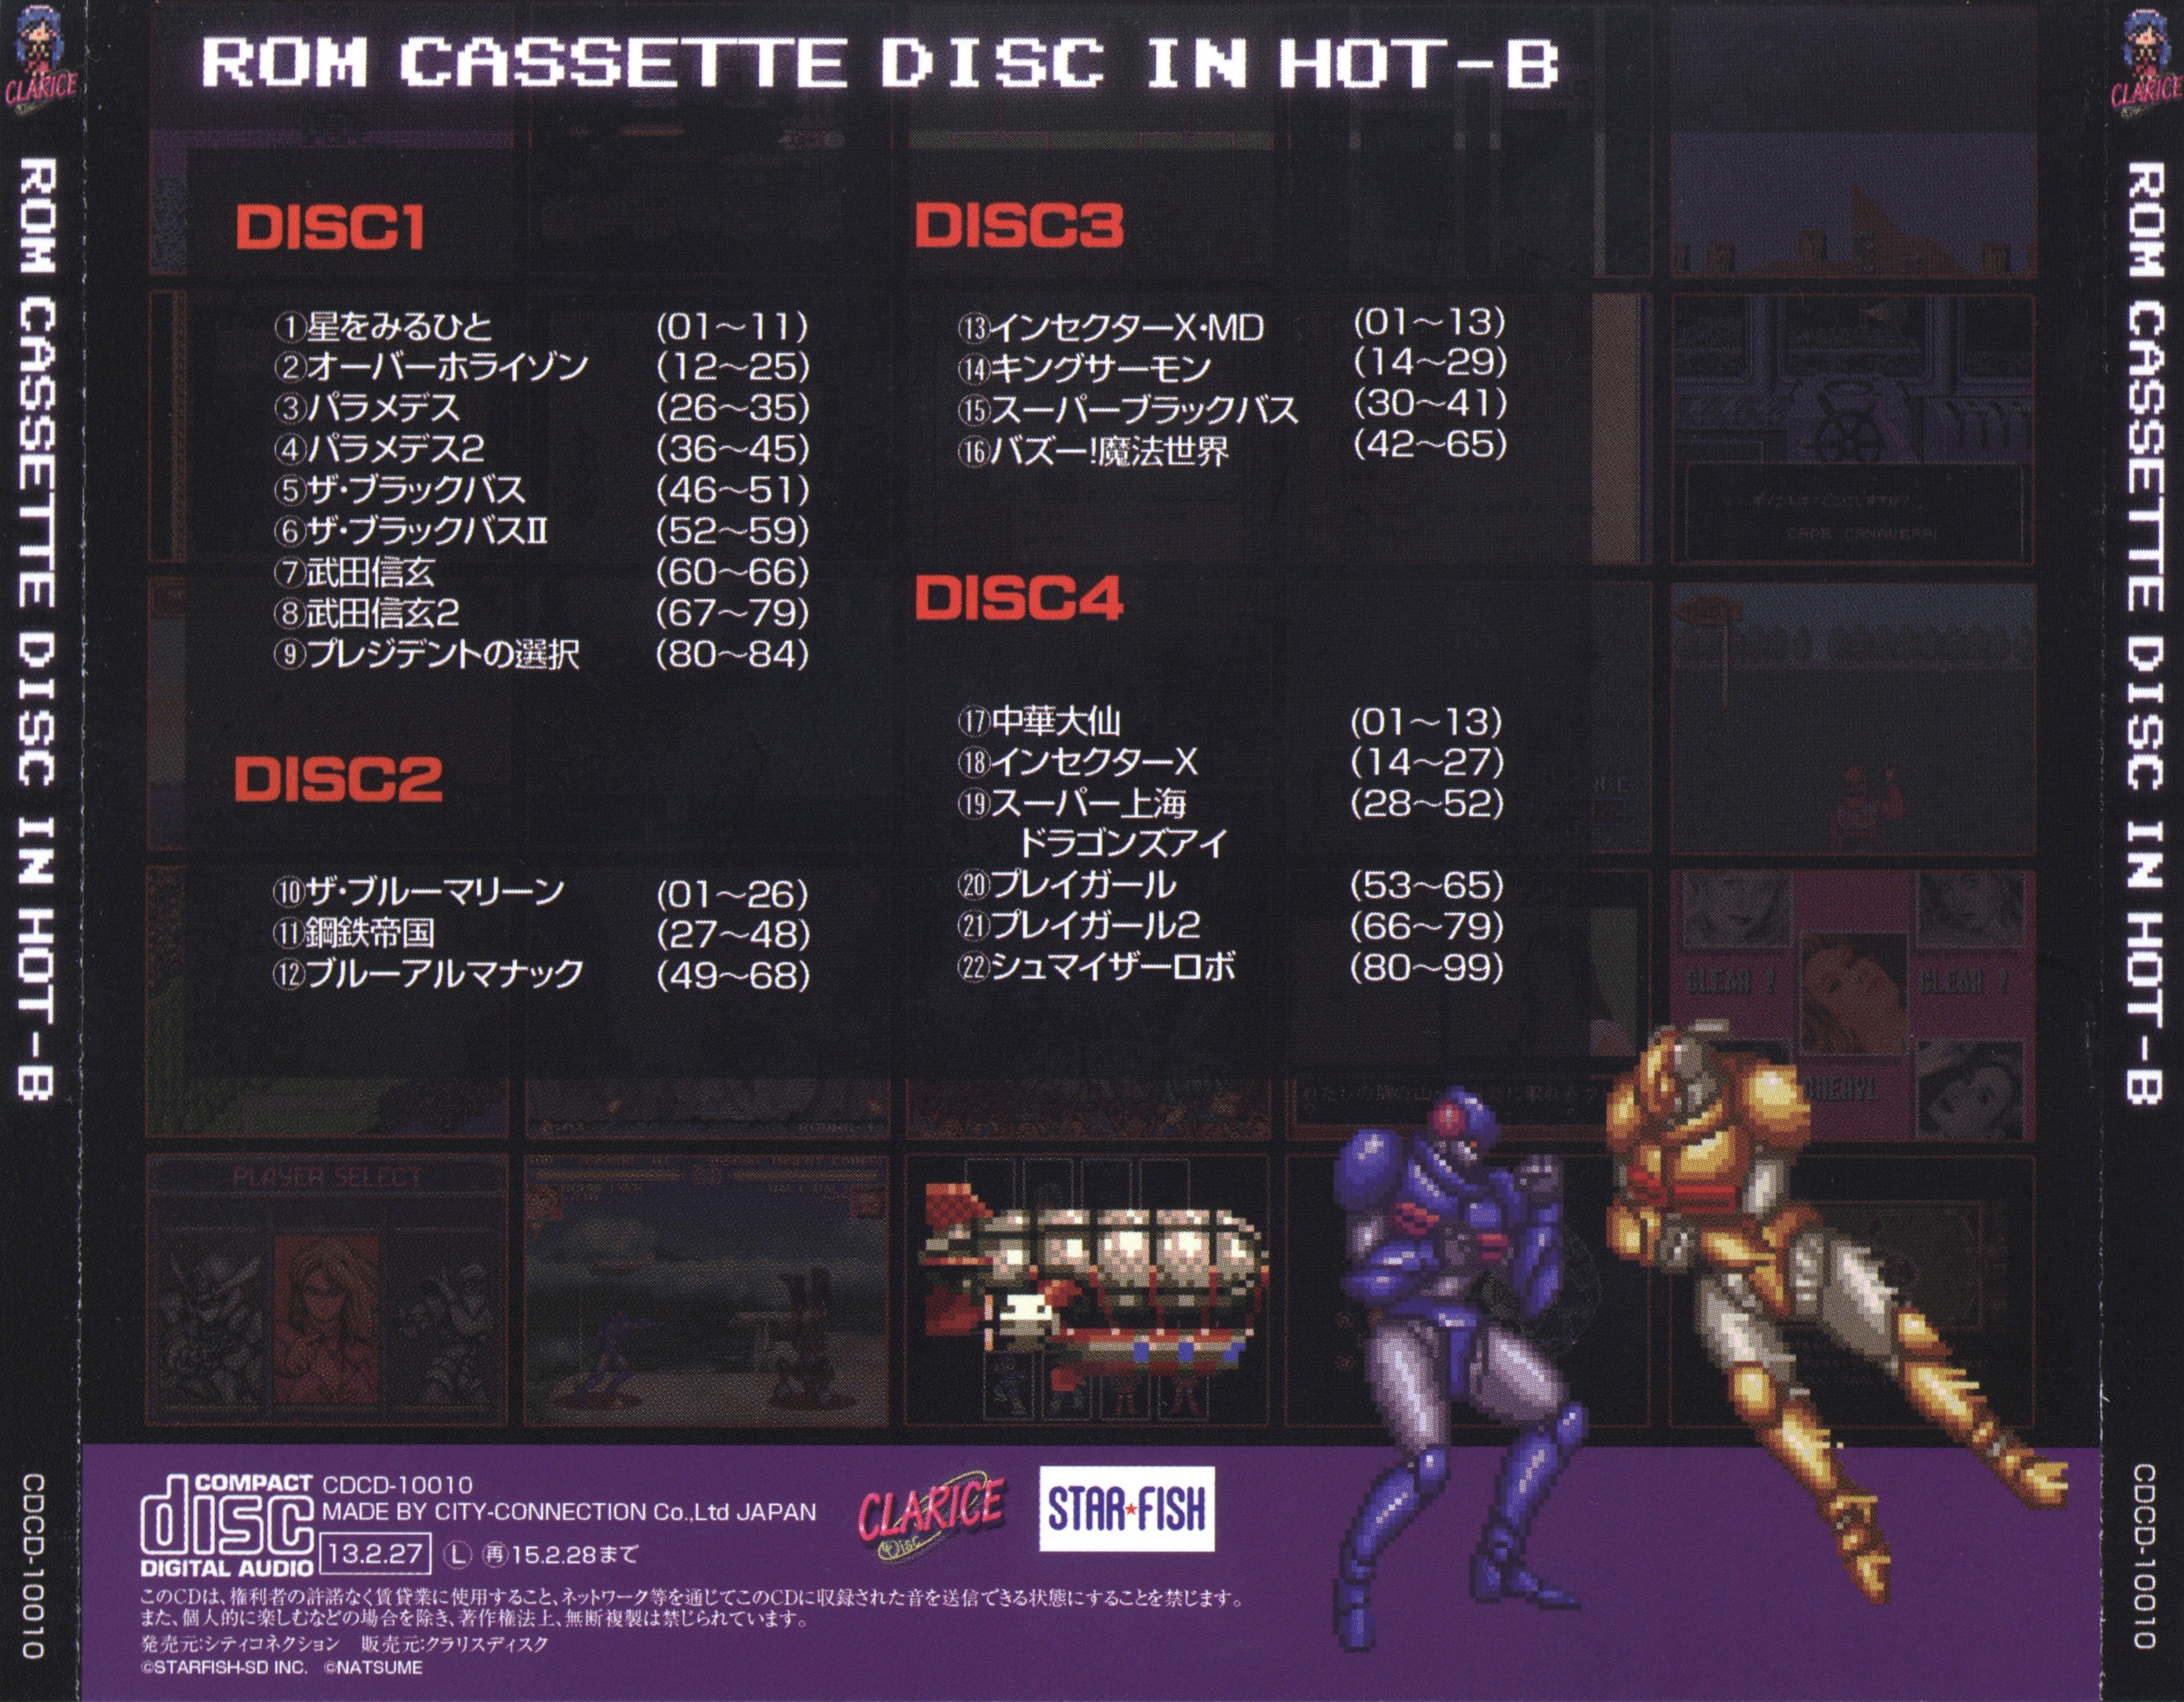 Rom Cassette Disc In HOT-B (2013) MP3 - Download Rom Cassette Disc In HOT-B  (2013) Soundtracks for FREE!